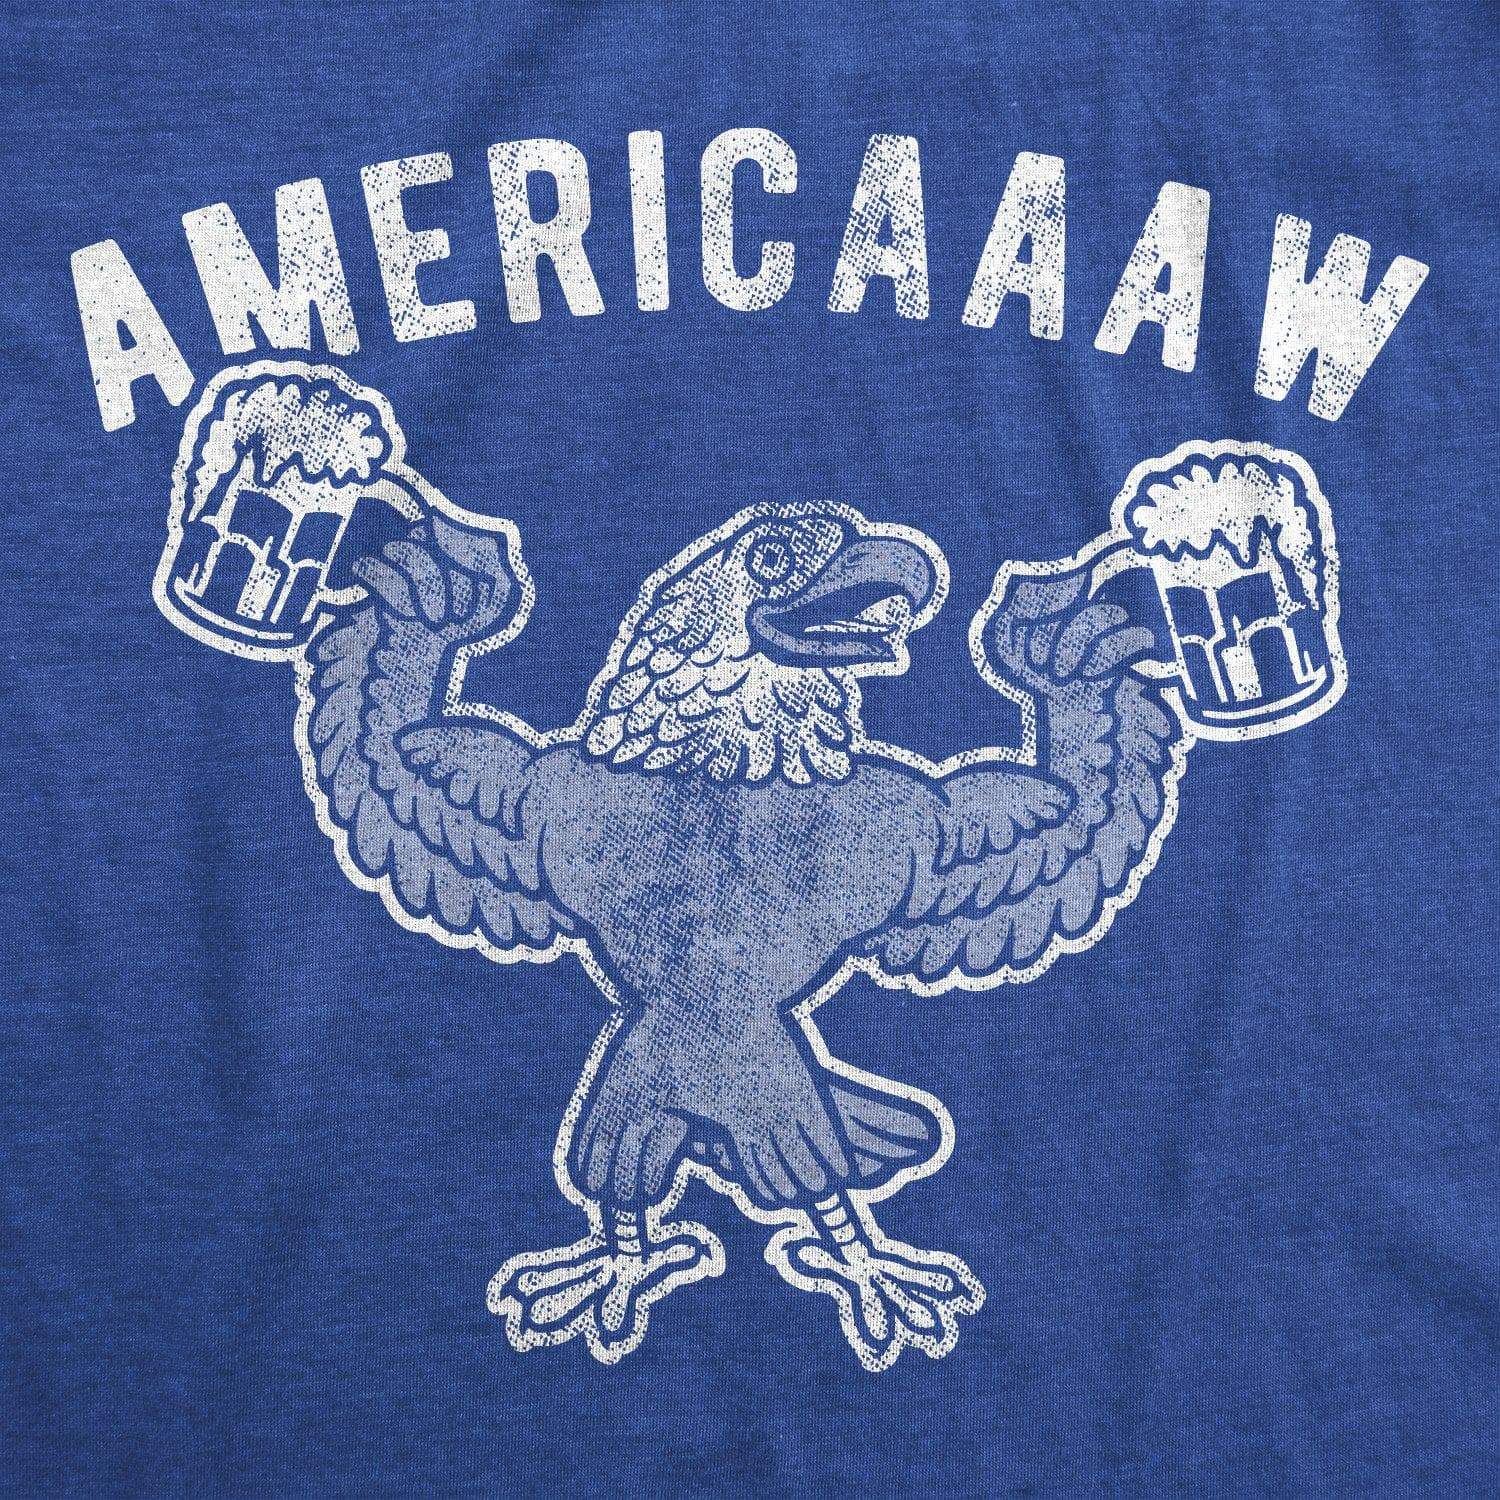 Americaaaw Men's Tank Top - Crazy Dog T-Shirts